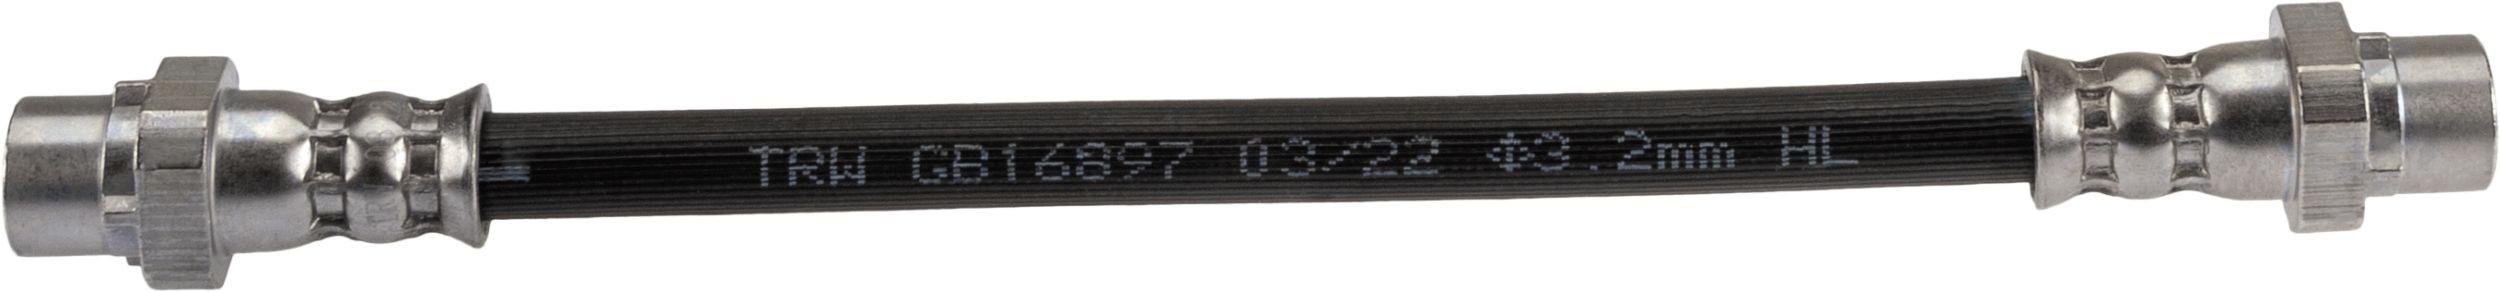 TRW 205 mm, M10x1 Length: 205mm, Thread Size 1: M10x1, Thread Size 2: M10x1 Brake line PHA512 buy